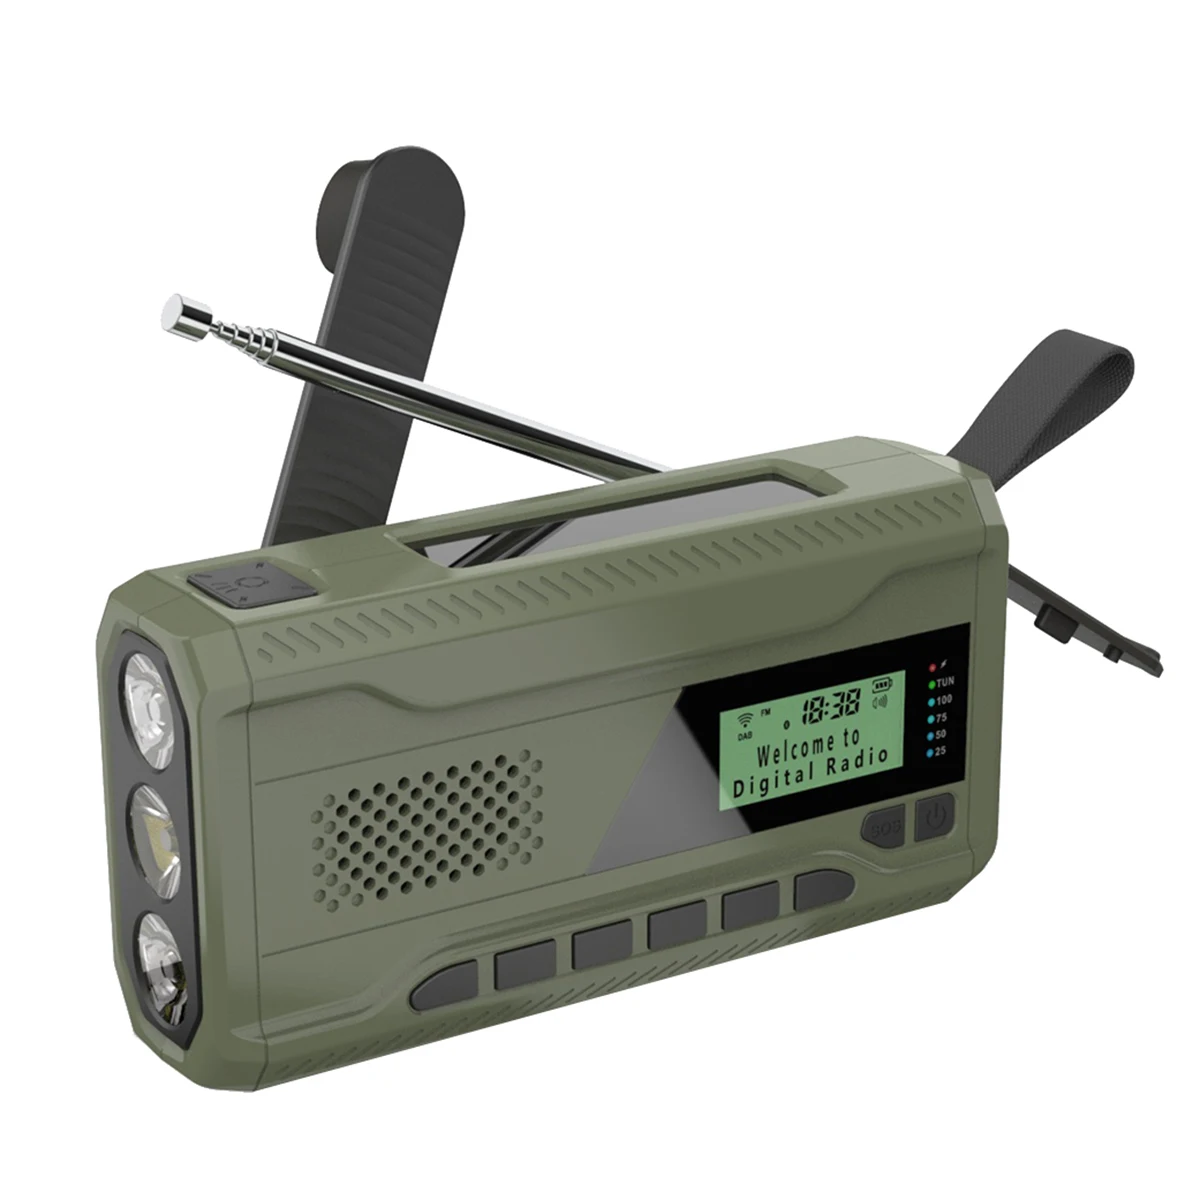 DAB/FM Bluetooth Radio Emergency Radio Built in 4500Mah Battery Portable Solar Hand Crank Radio Receiver Outdoor Radio